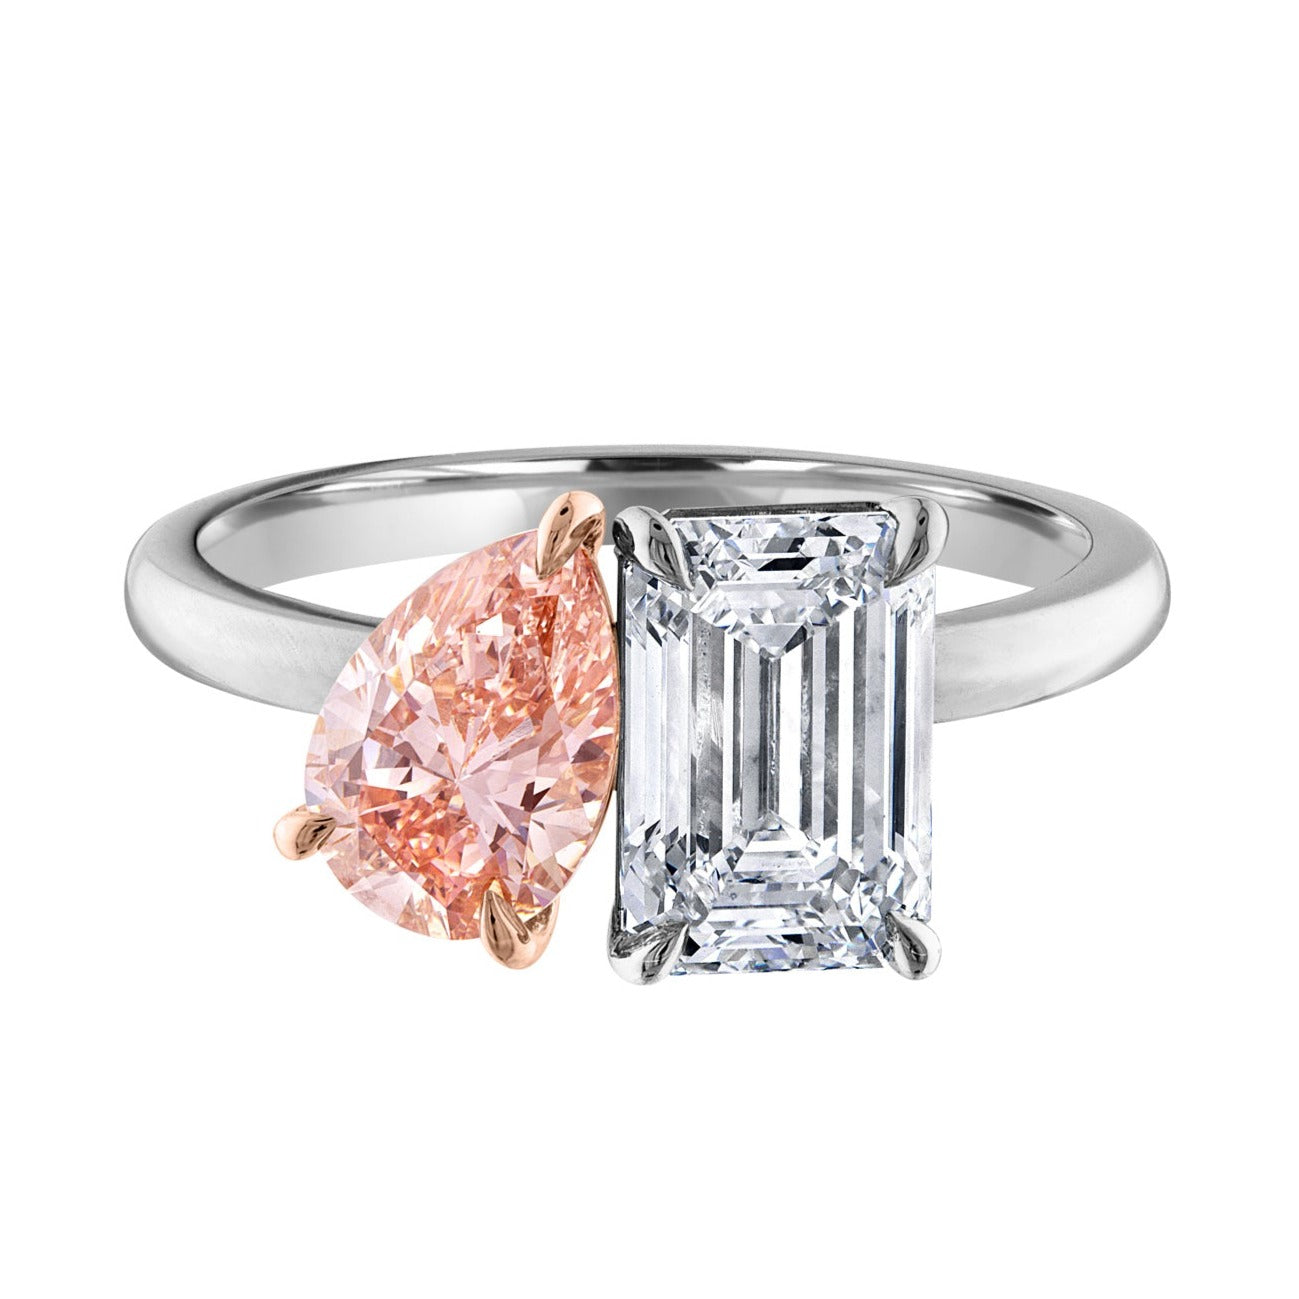 Moi et Toi Style Pink Pear Shape Diamond Emerald-Cut Diamond